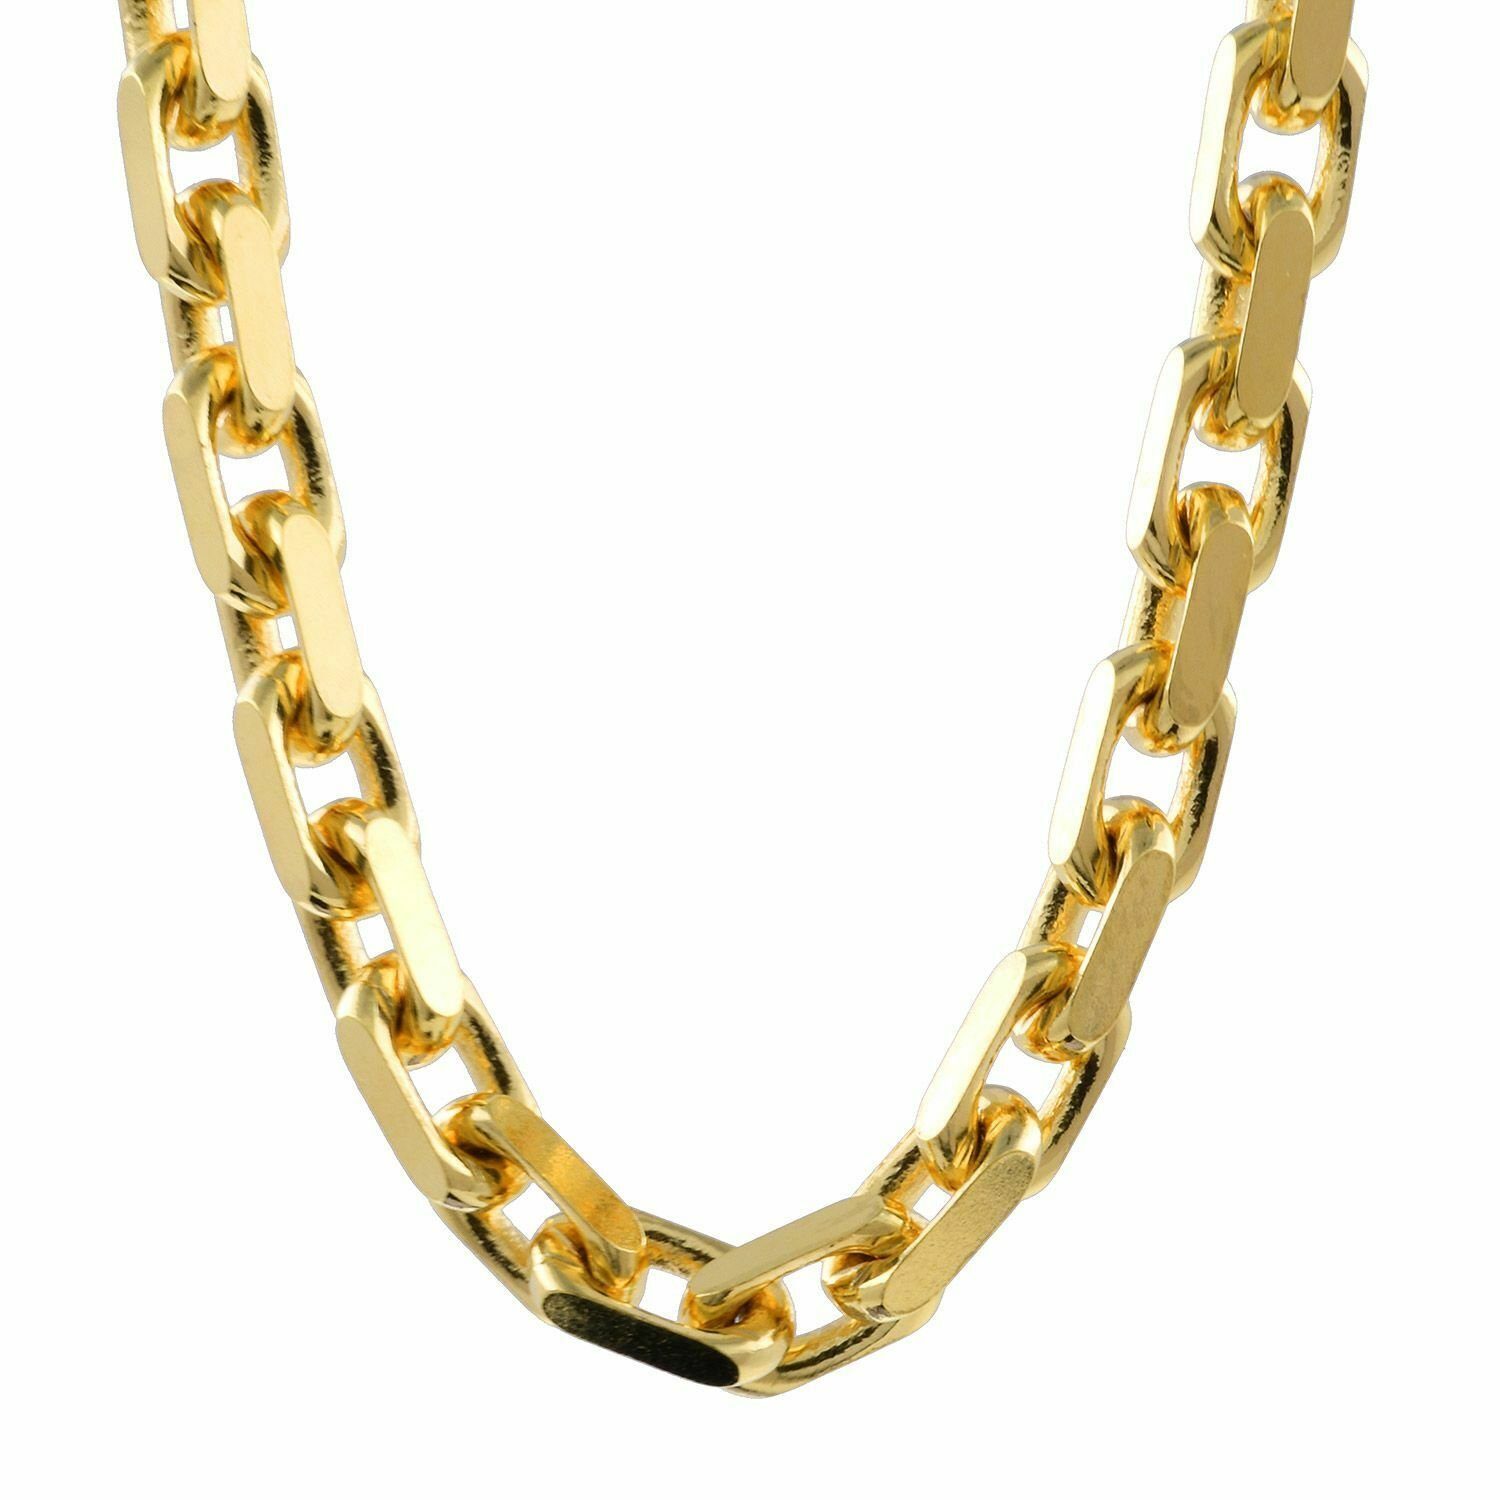 HOPLO Goldkette Ankerkette diamantiert 750 - 18 Karat Gold 4,0 mm Kettenlänge 60 cm (inkl. Schmuckbox), Made in Germany | Ketten ohne Anhänger